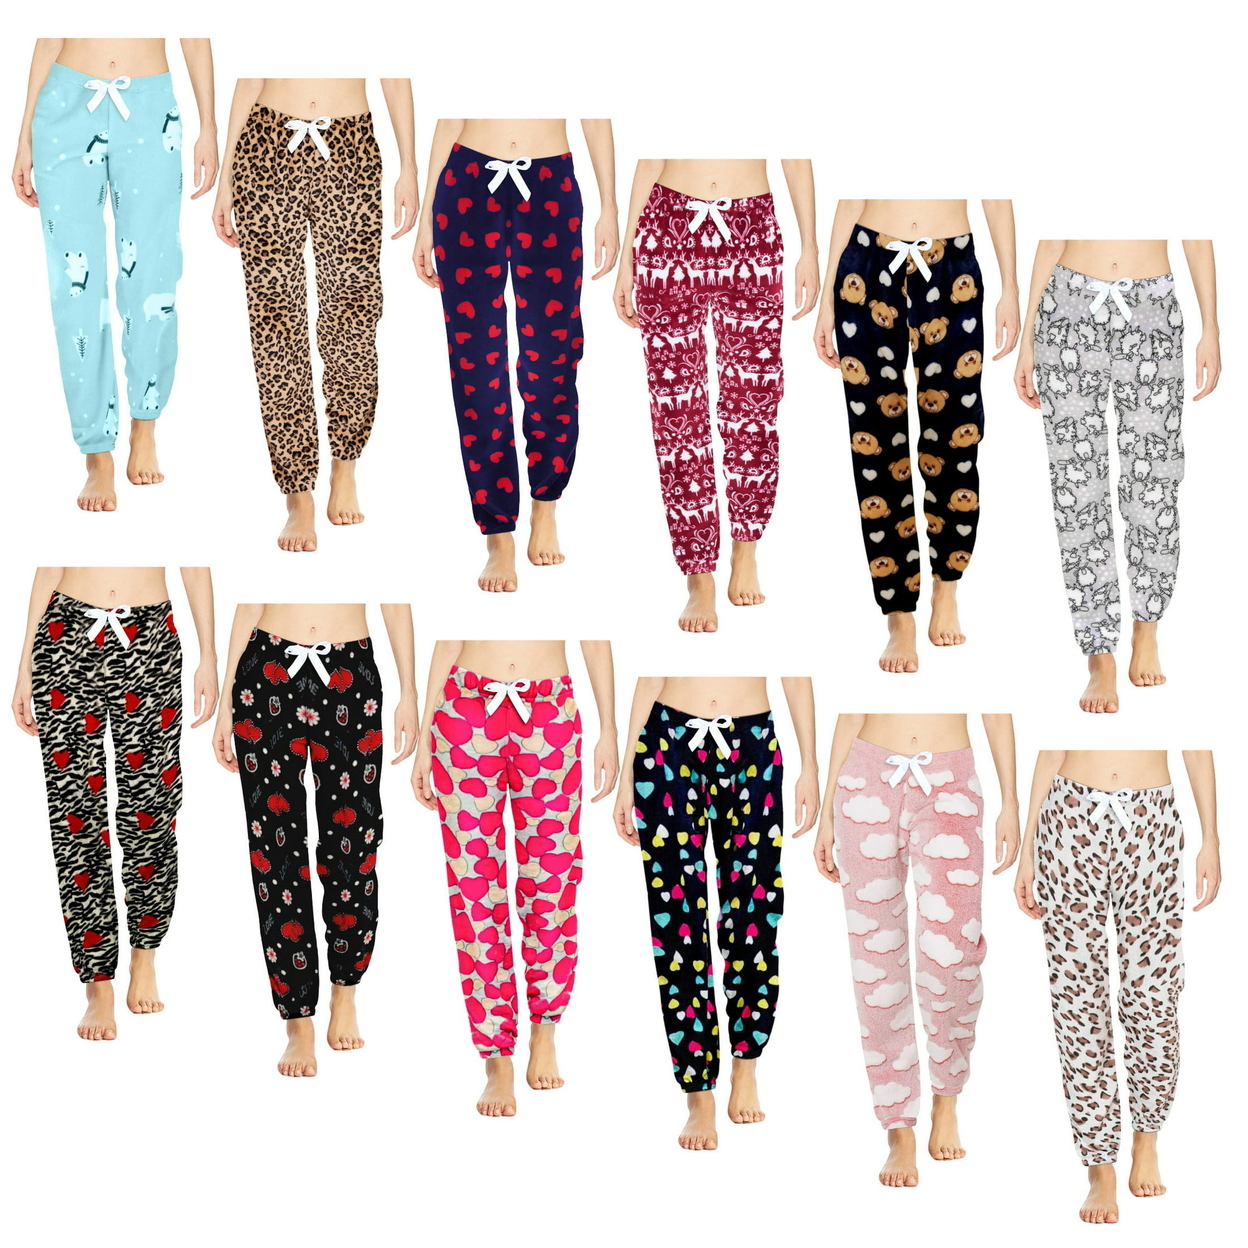 4-Pack: Women's Printed Ultra-Soft Comfy Stretch Micro-Fleece Pajama Lounge Pants - Xx-large, Love